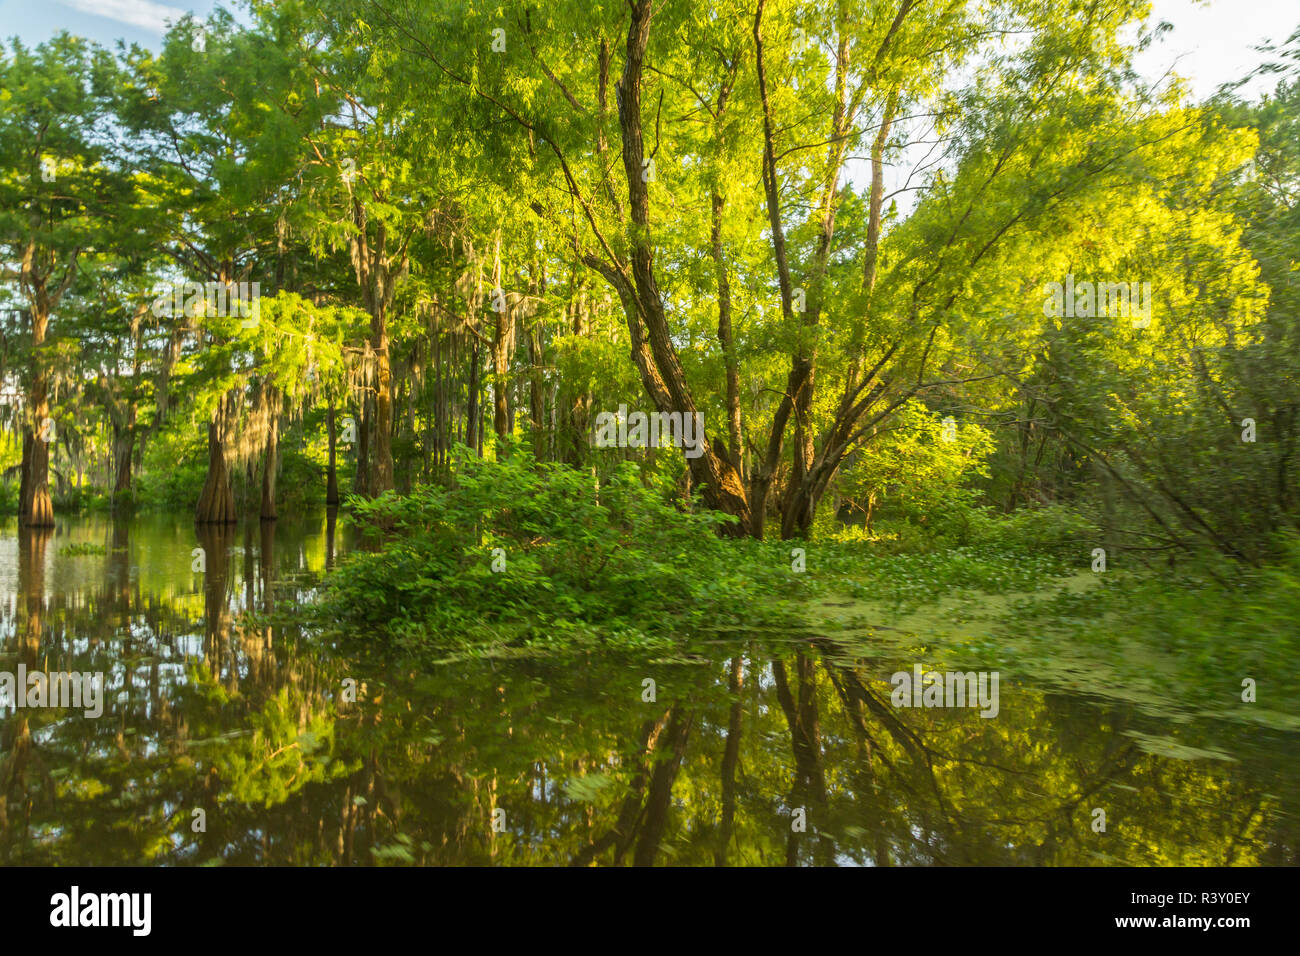 USA, Louisiana, Atchafalaya National Heritage Area. Tupelo trees in swamp. Stock Photo